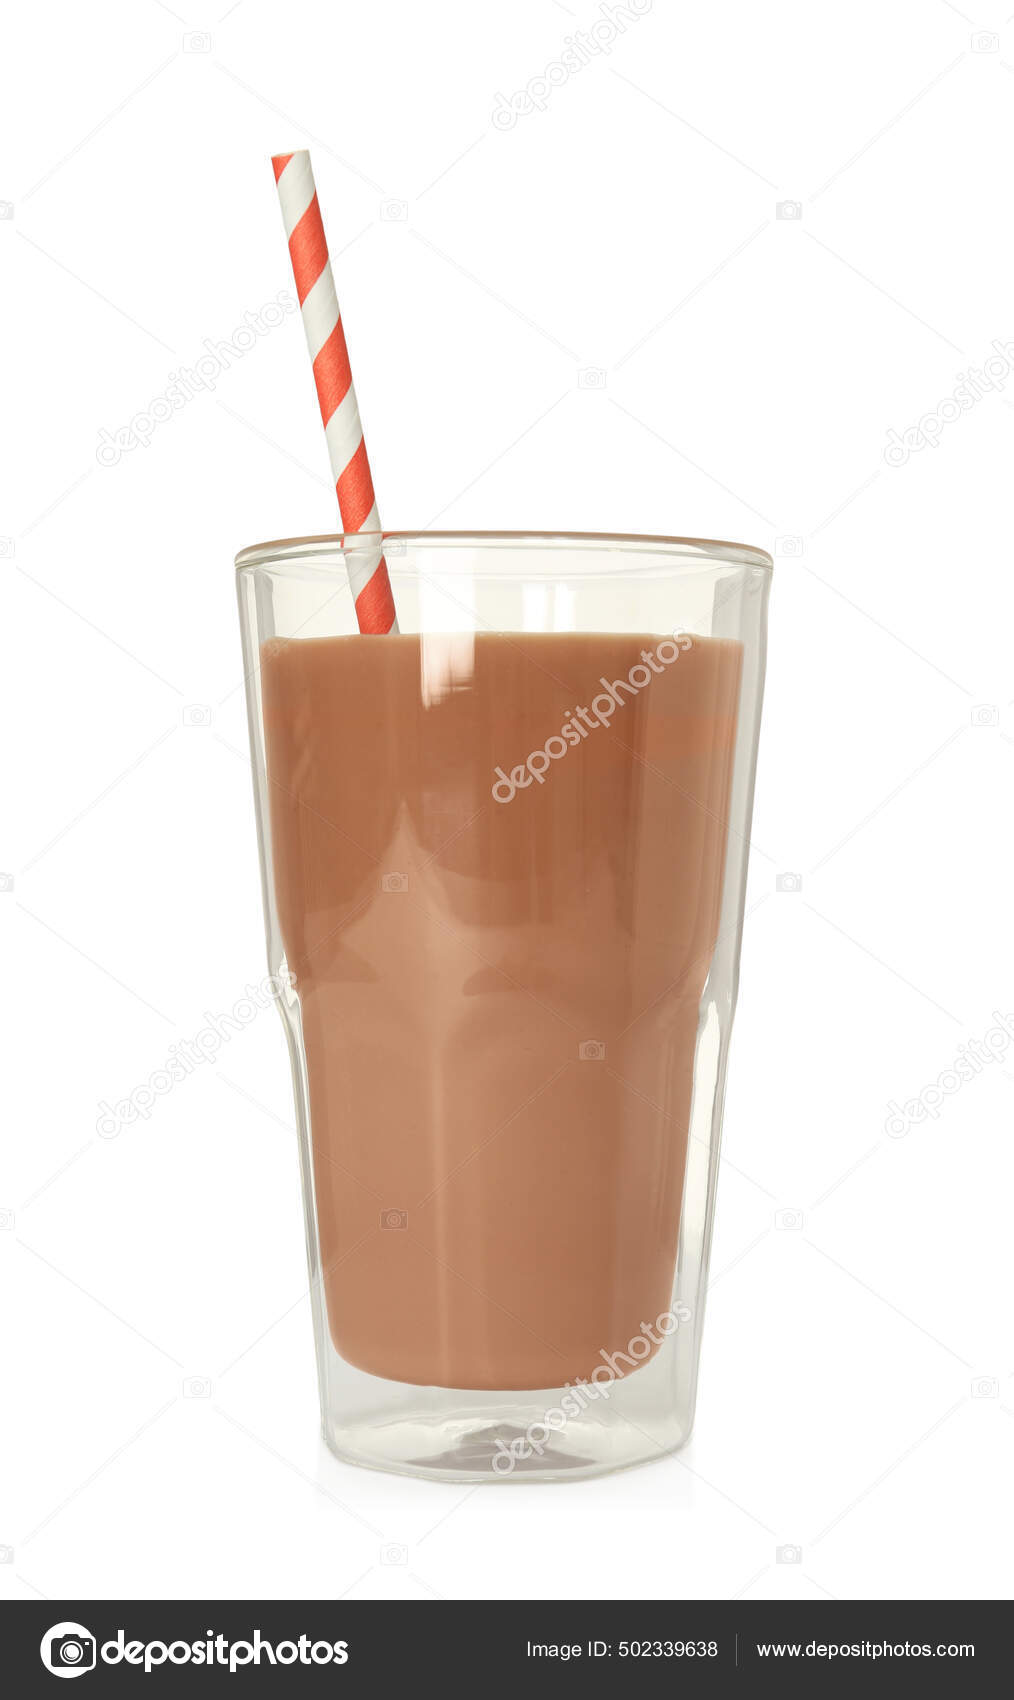 https://st2.depositphotos.com/16122460/50233/i/1600/depositphotos_502339638-stock-photo-delicious-chocolate-milk-glass-isolated.jpg